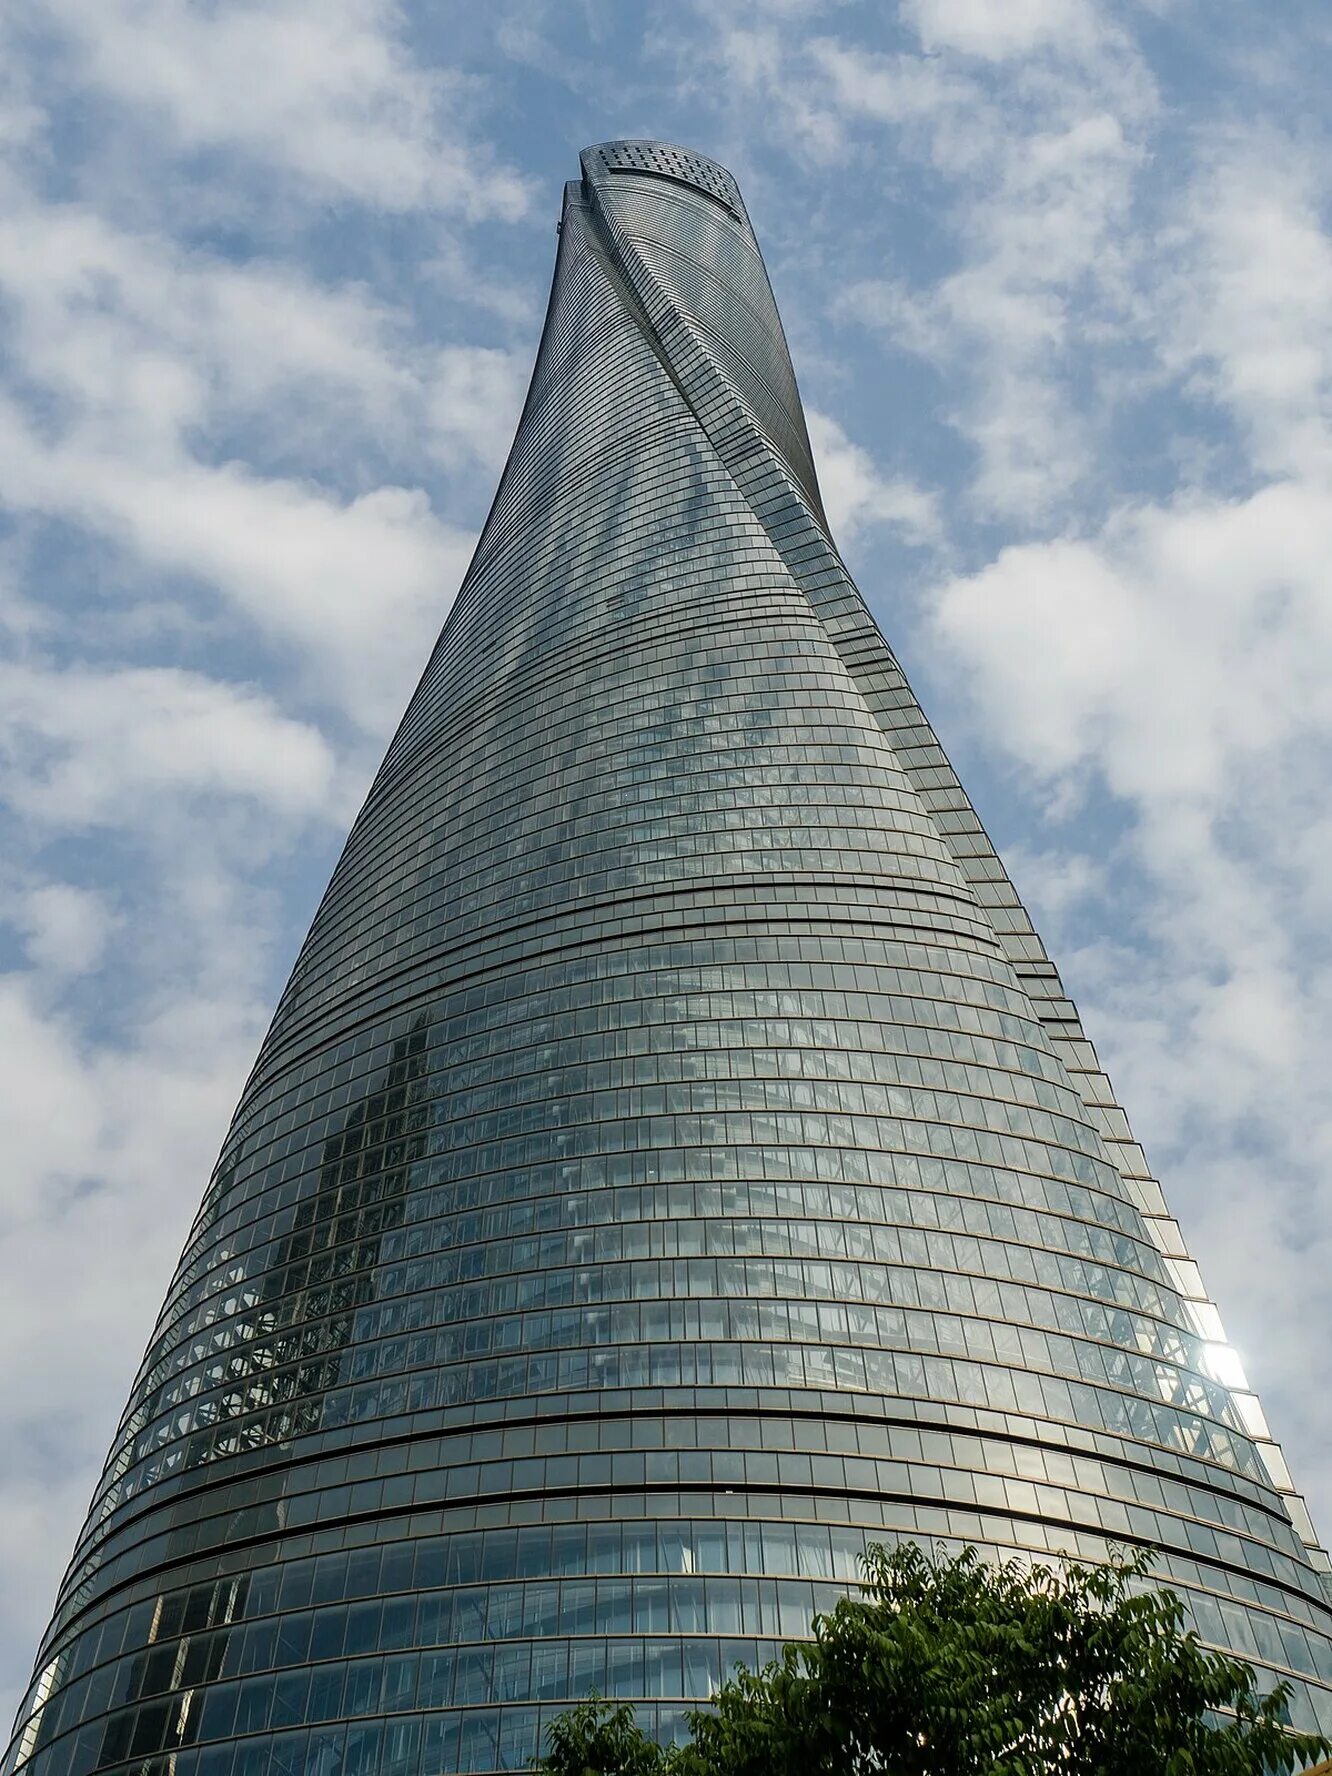 Башня Шанхай Тауэр. Шанхай ТОВЕР небоскреб. Шанхай башни высотки. 632-Метровая Шанхайская башня. Высотных башен